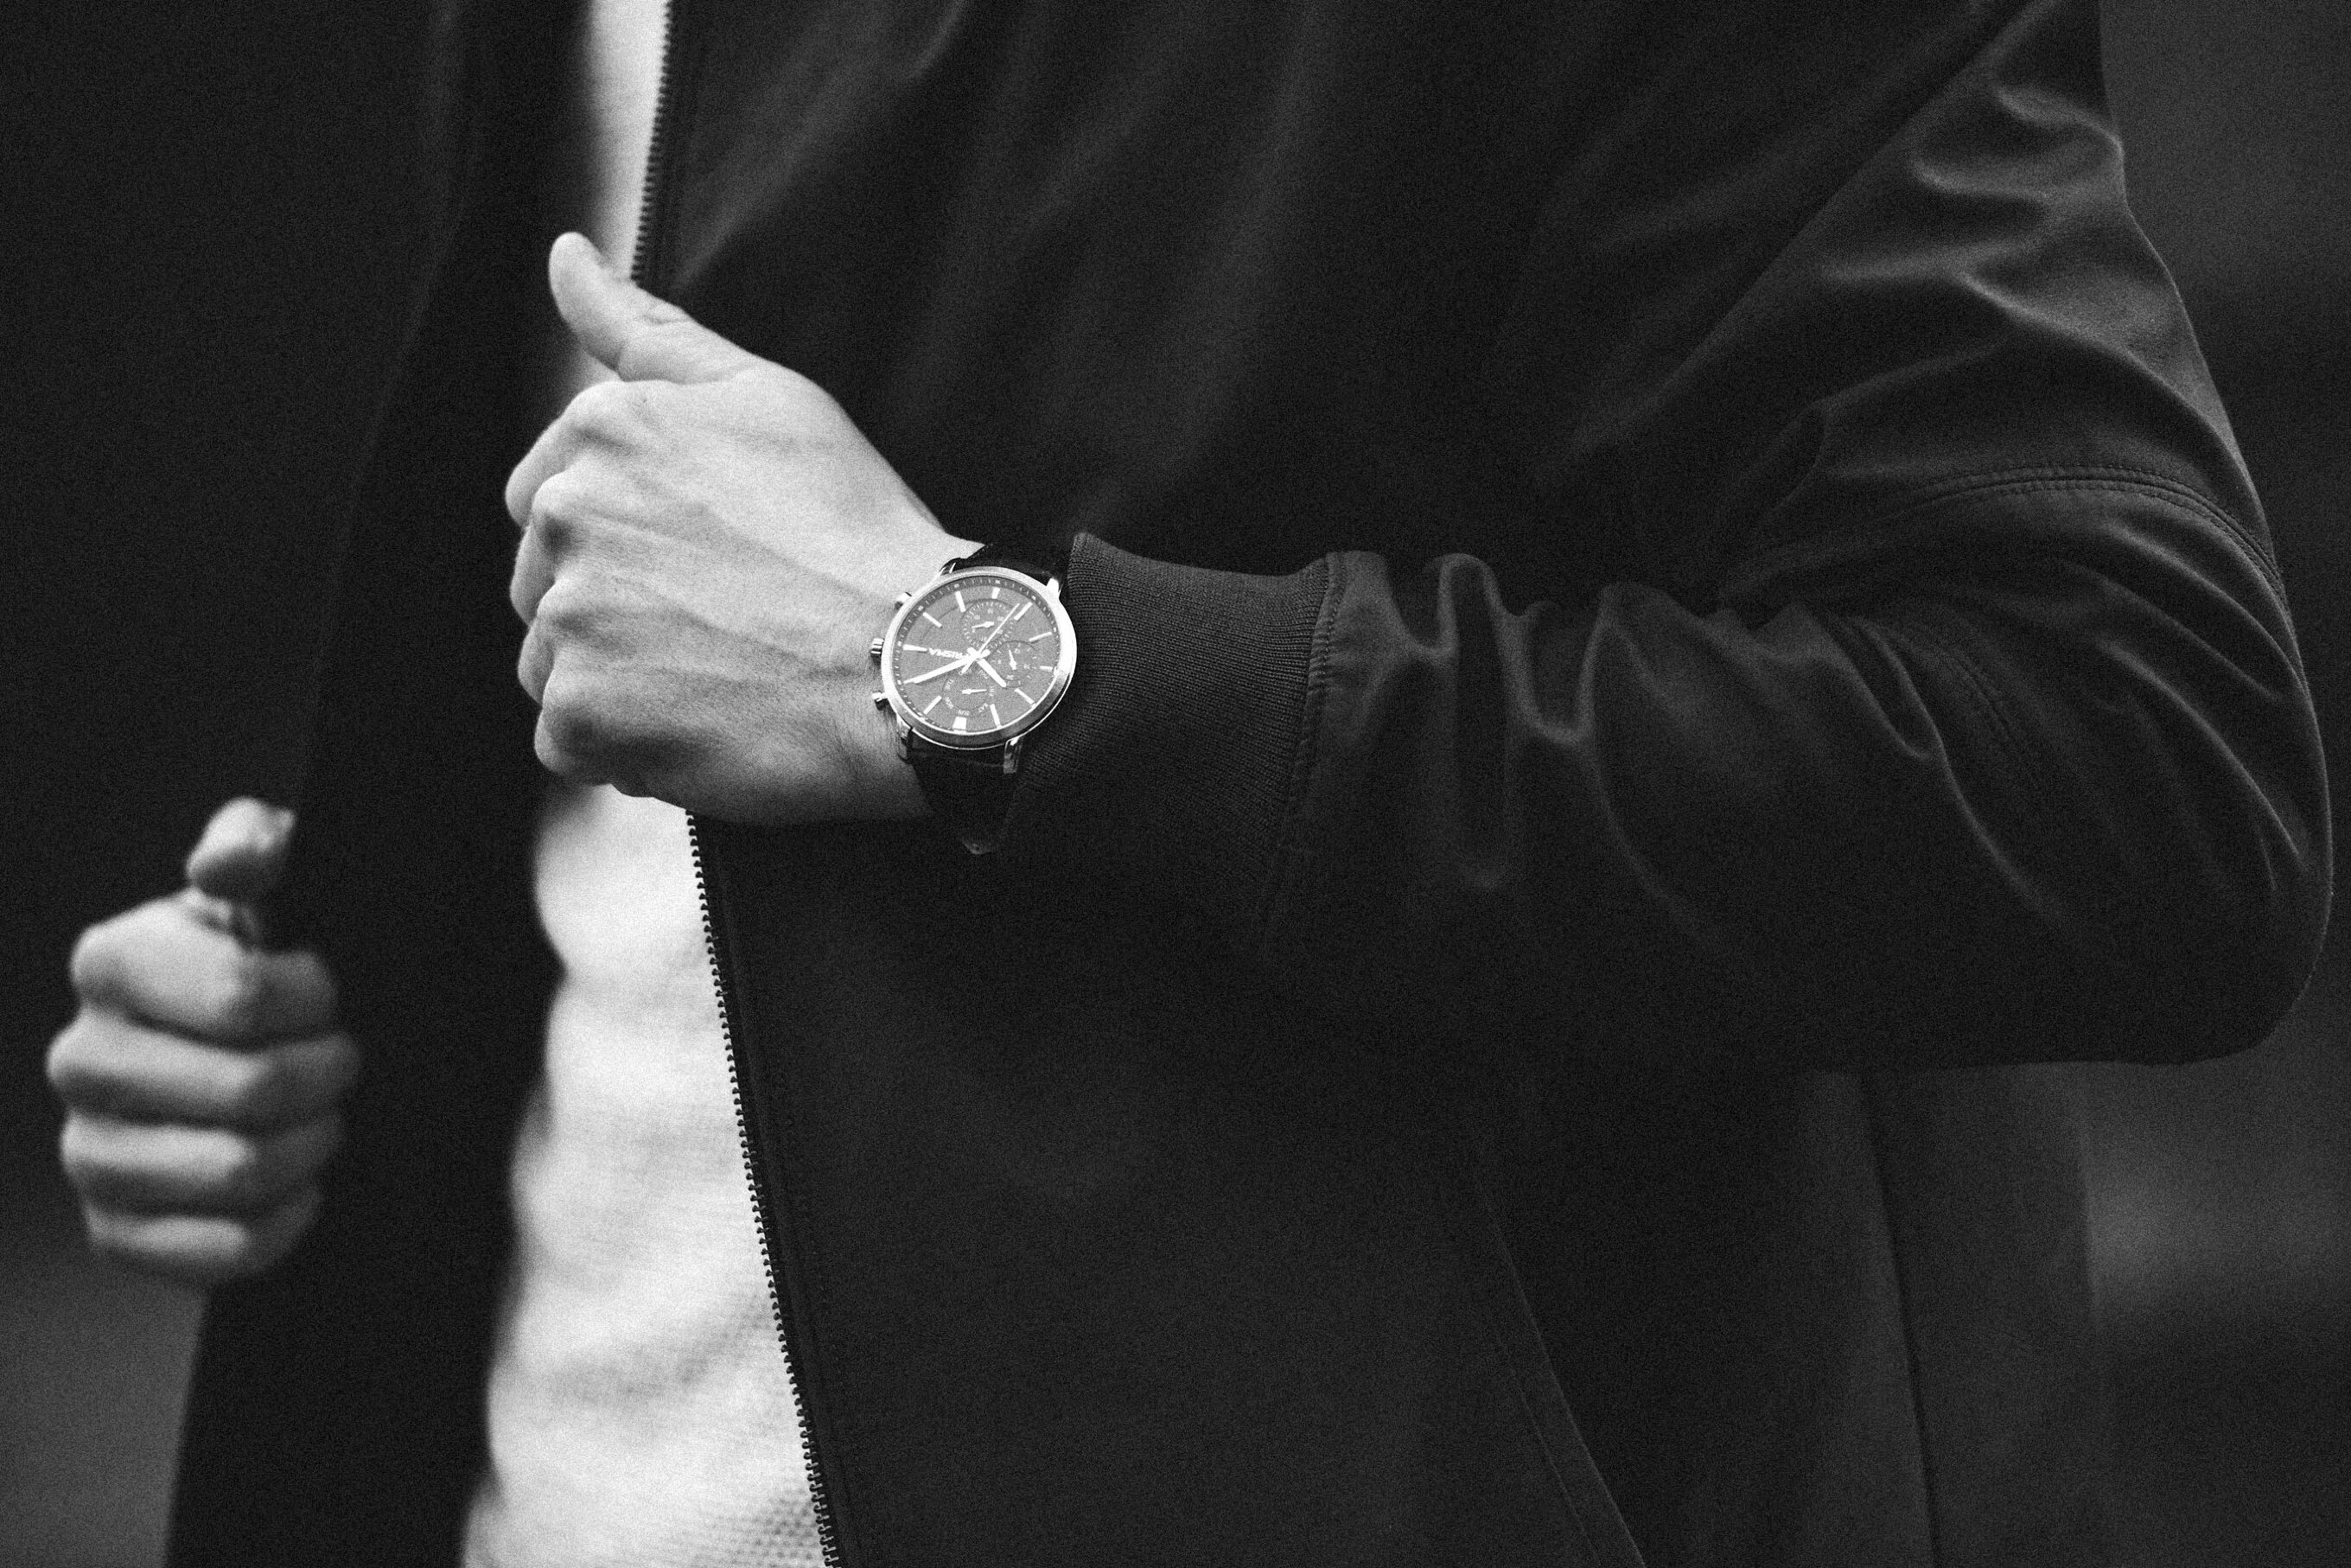 Watches website. Часы на руке. Мужчина с часами на руке. Часы наручные мужские на руке. Мужские часы на руке.